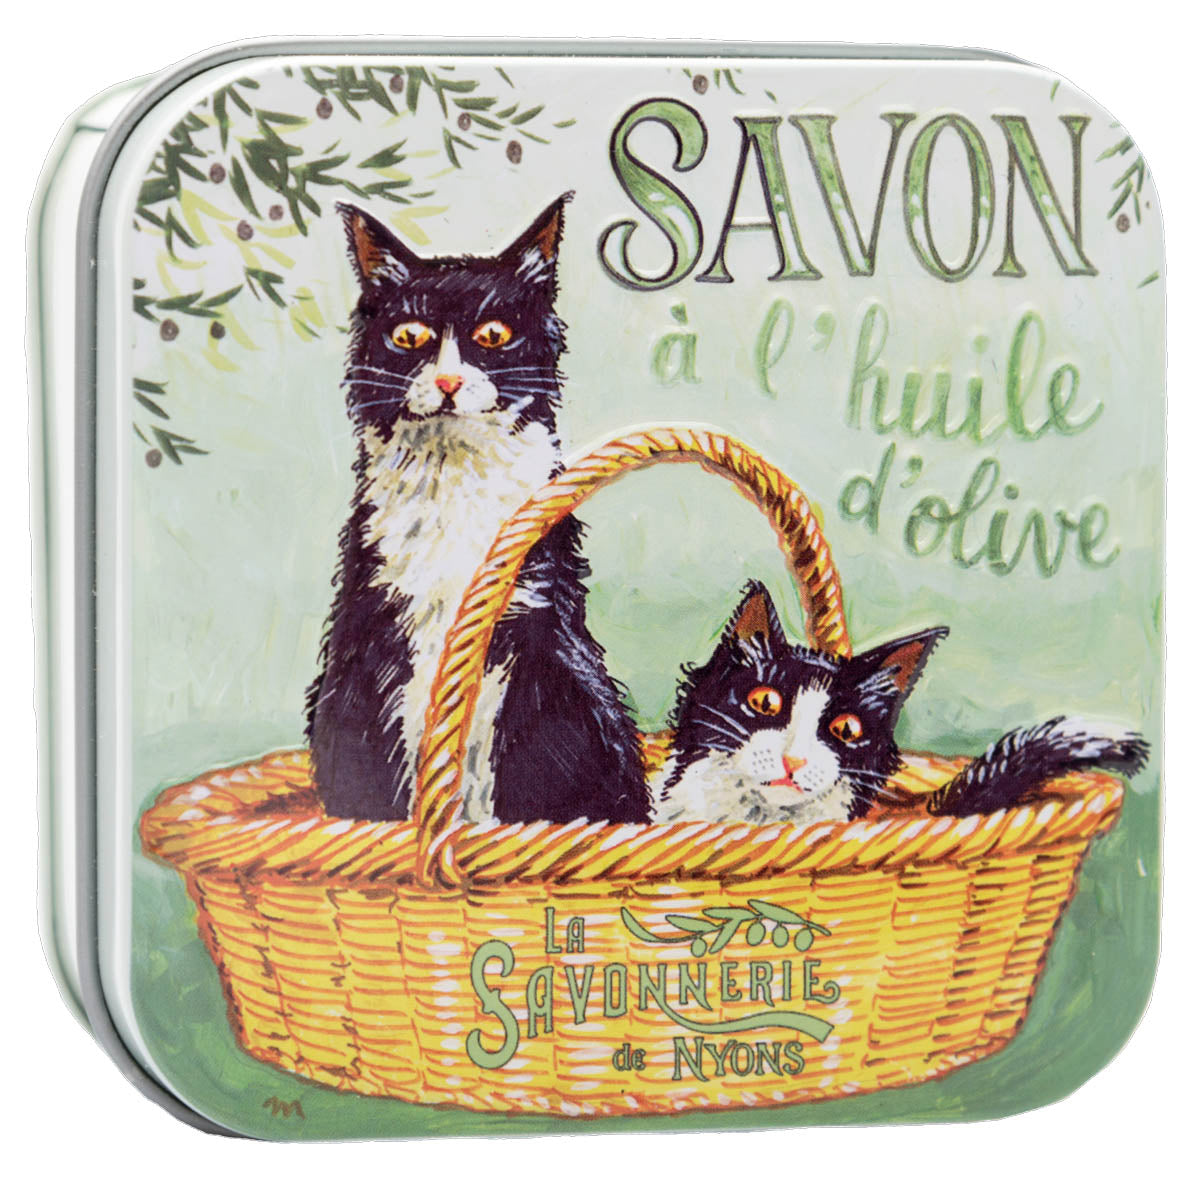 La Savonnerie de Nyons Metal box "Tout Doux" soap of 100 g 